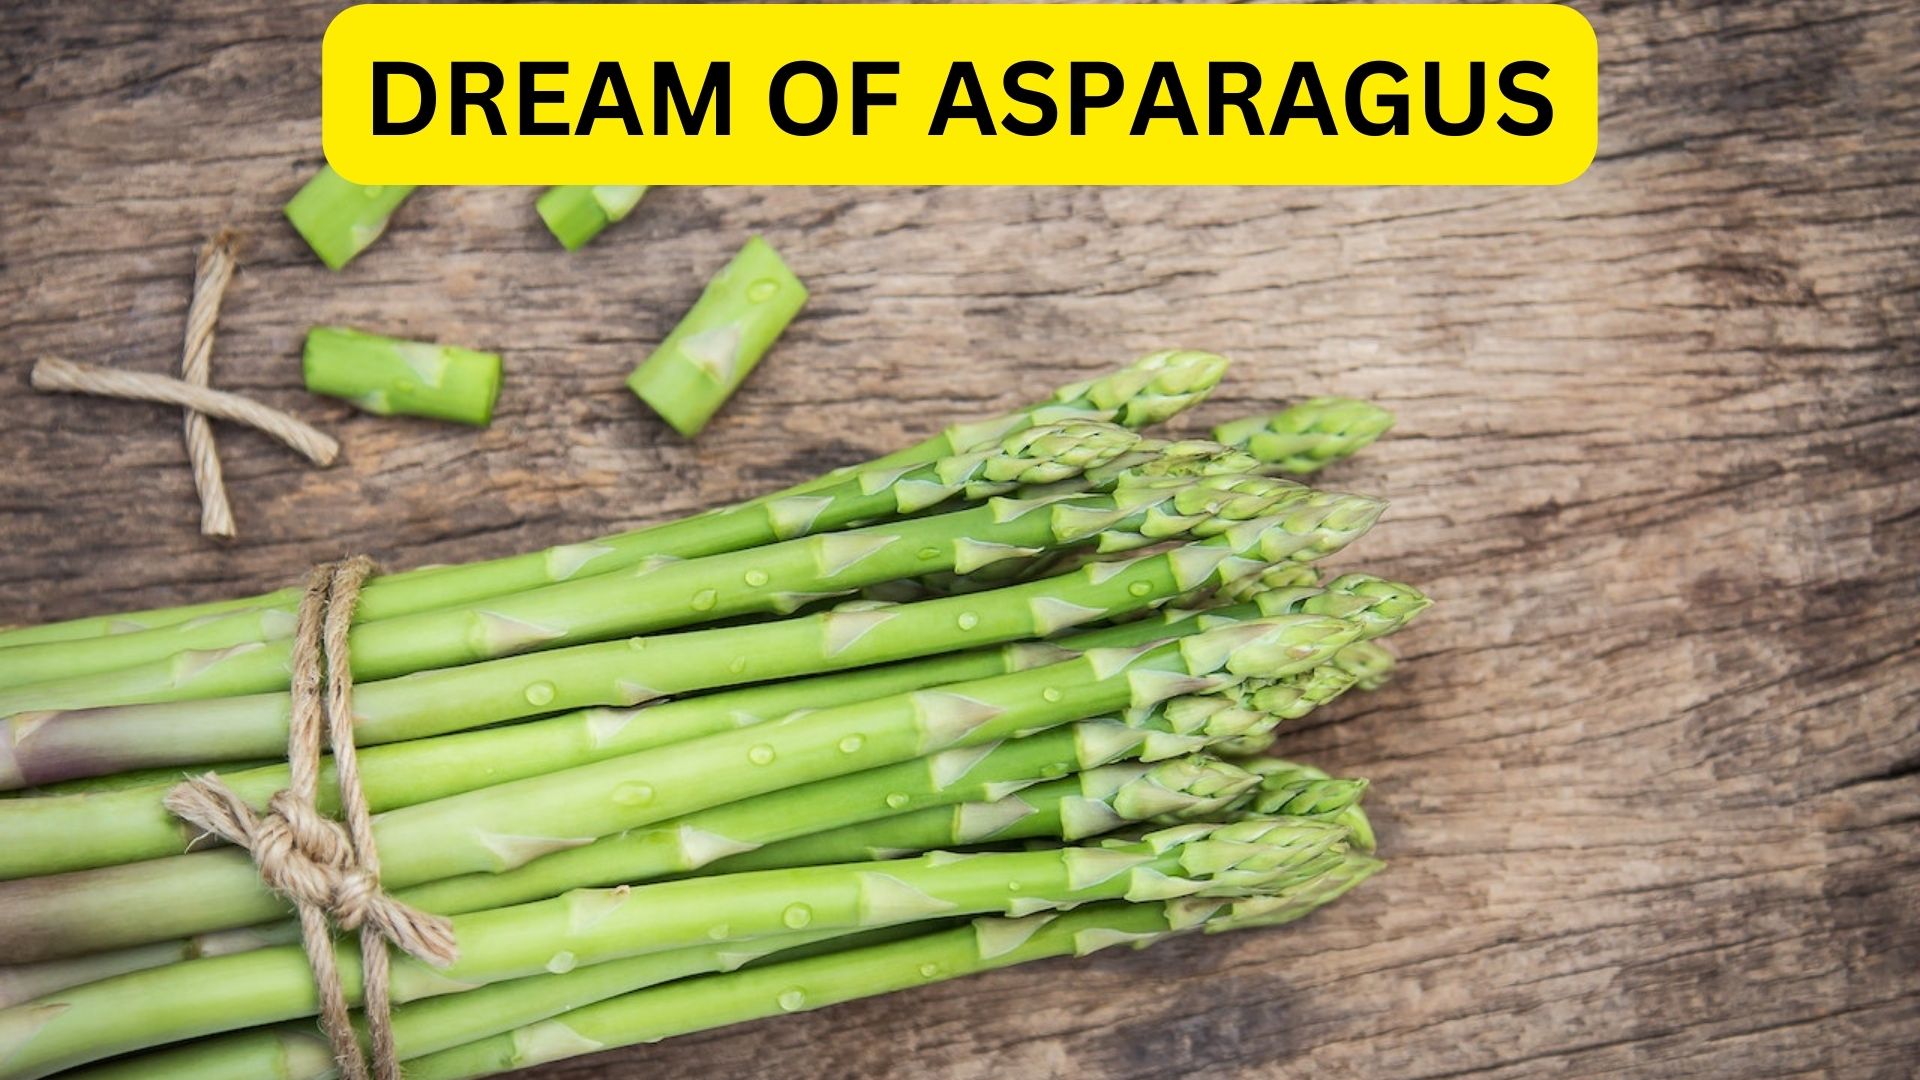 Dream Of Asparagus - Symbolizes Prosperity